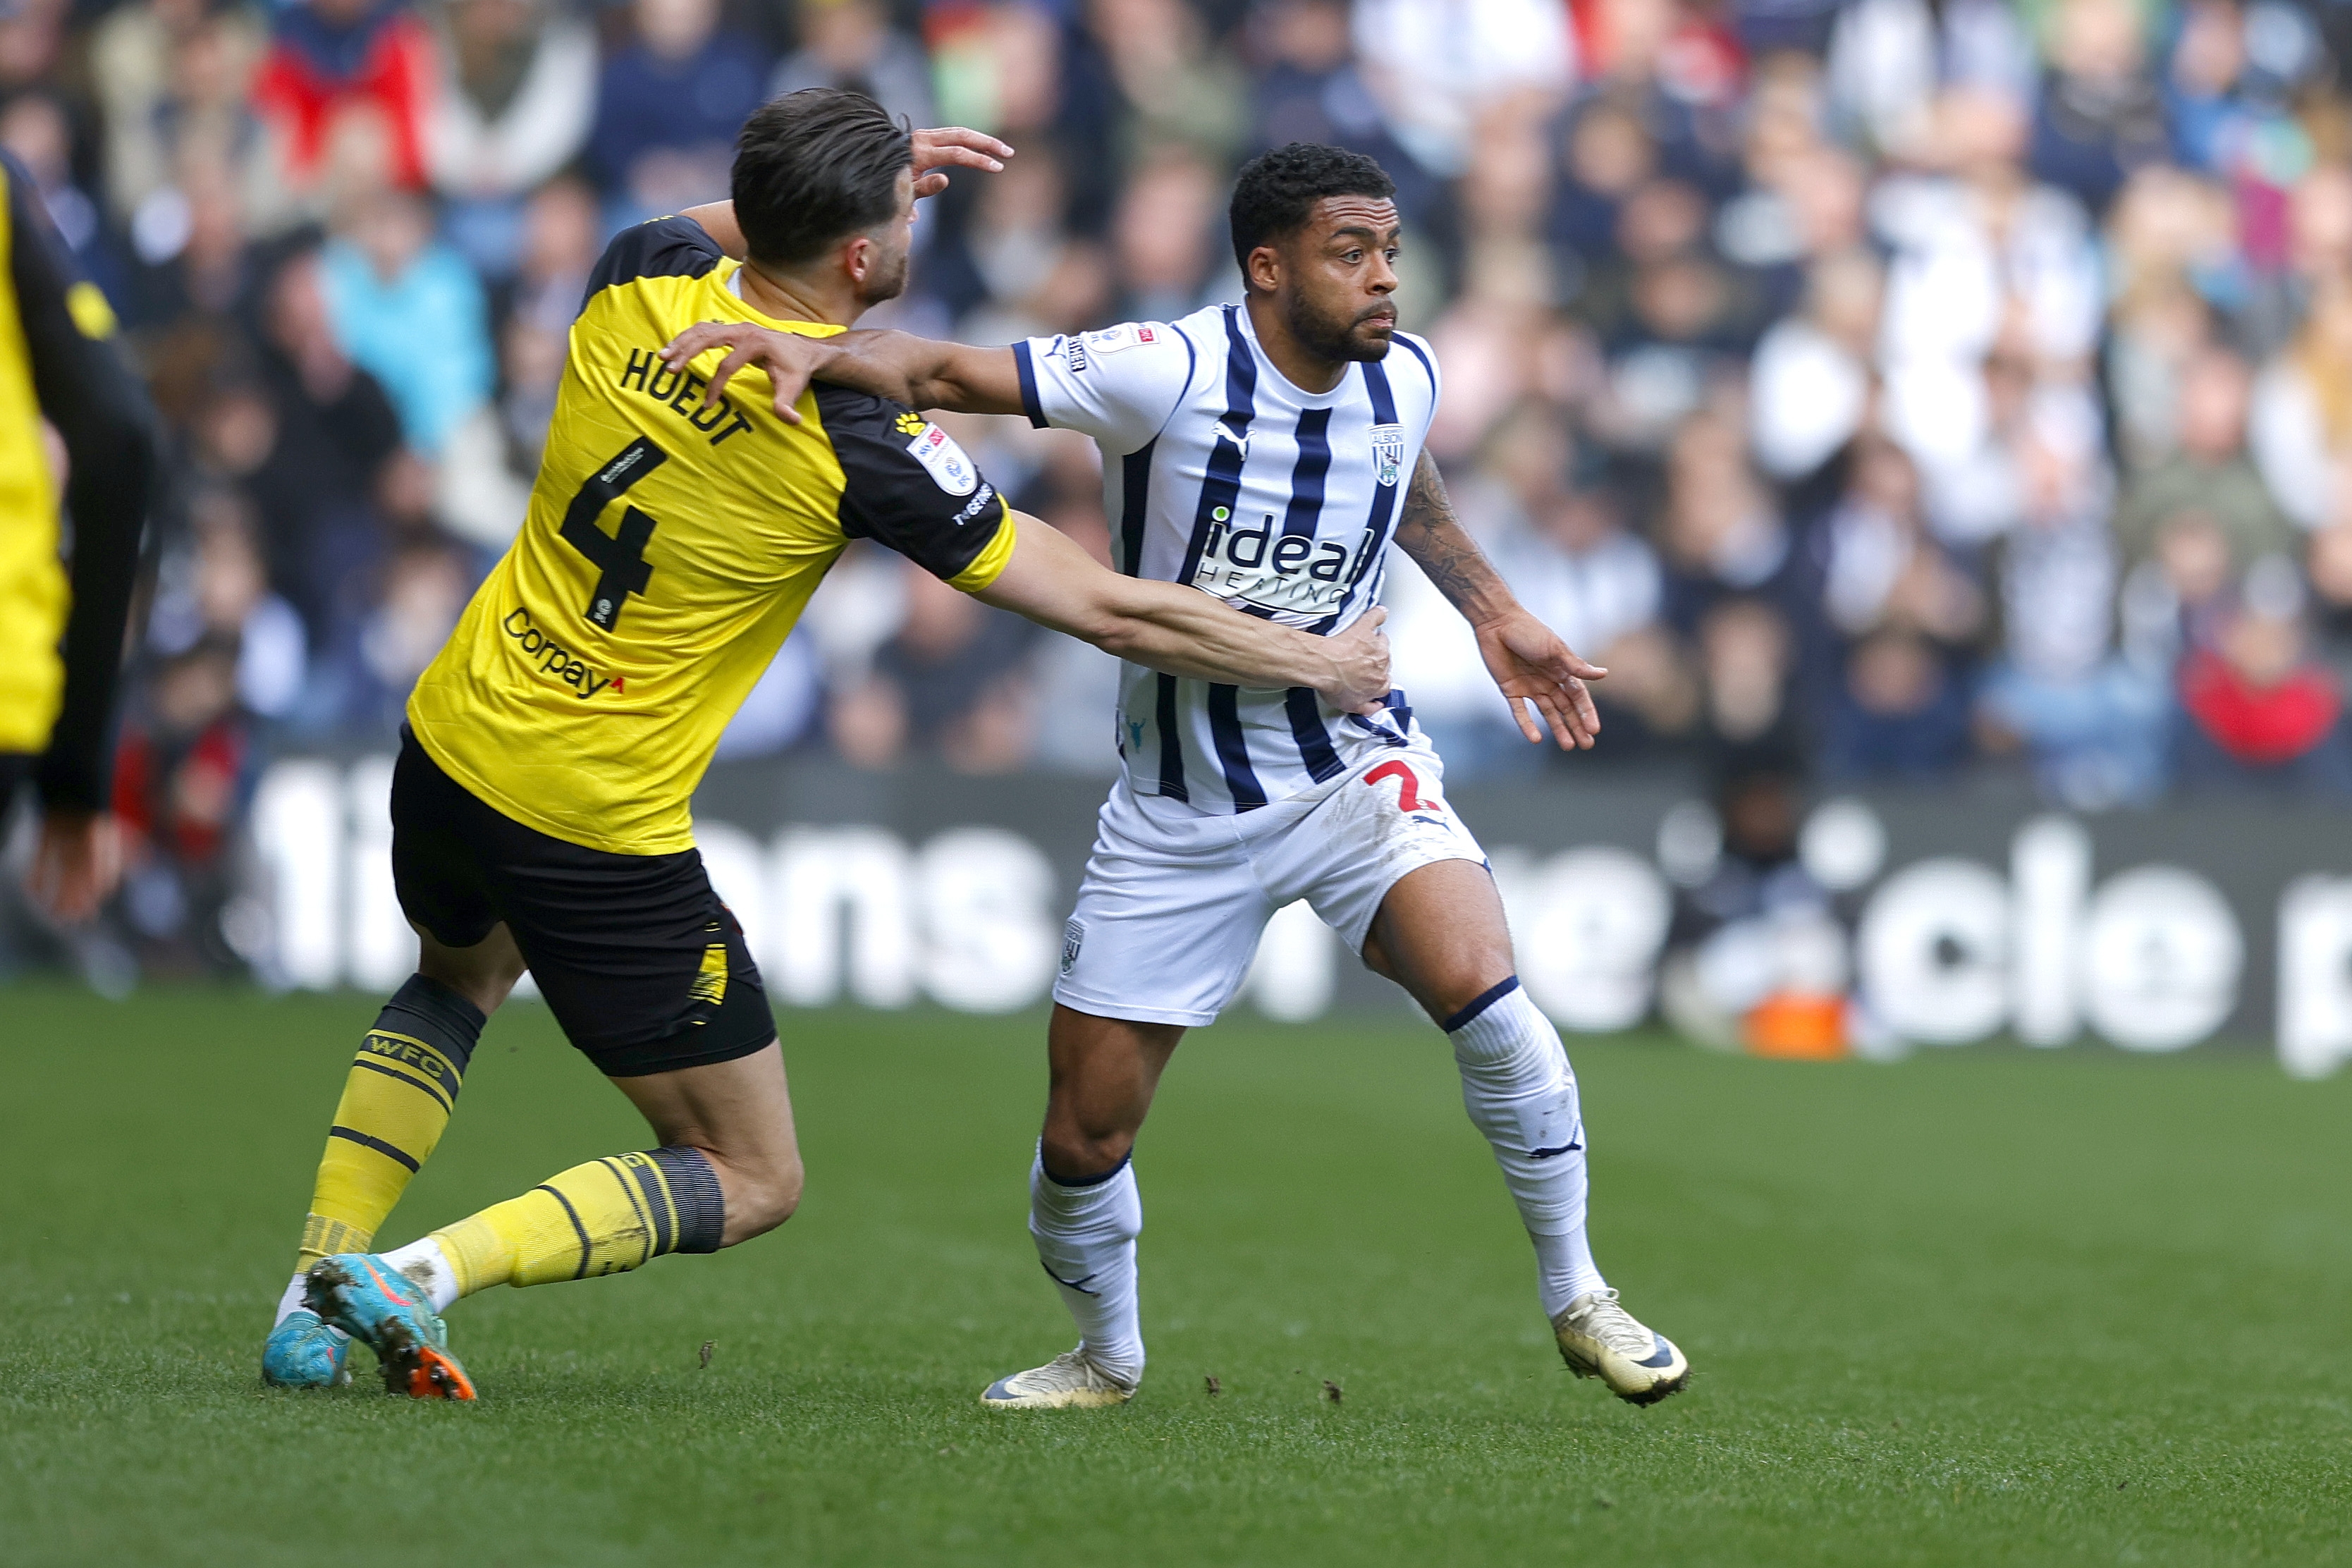 Darnell Furlong battles with a Watford player